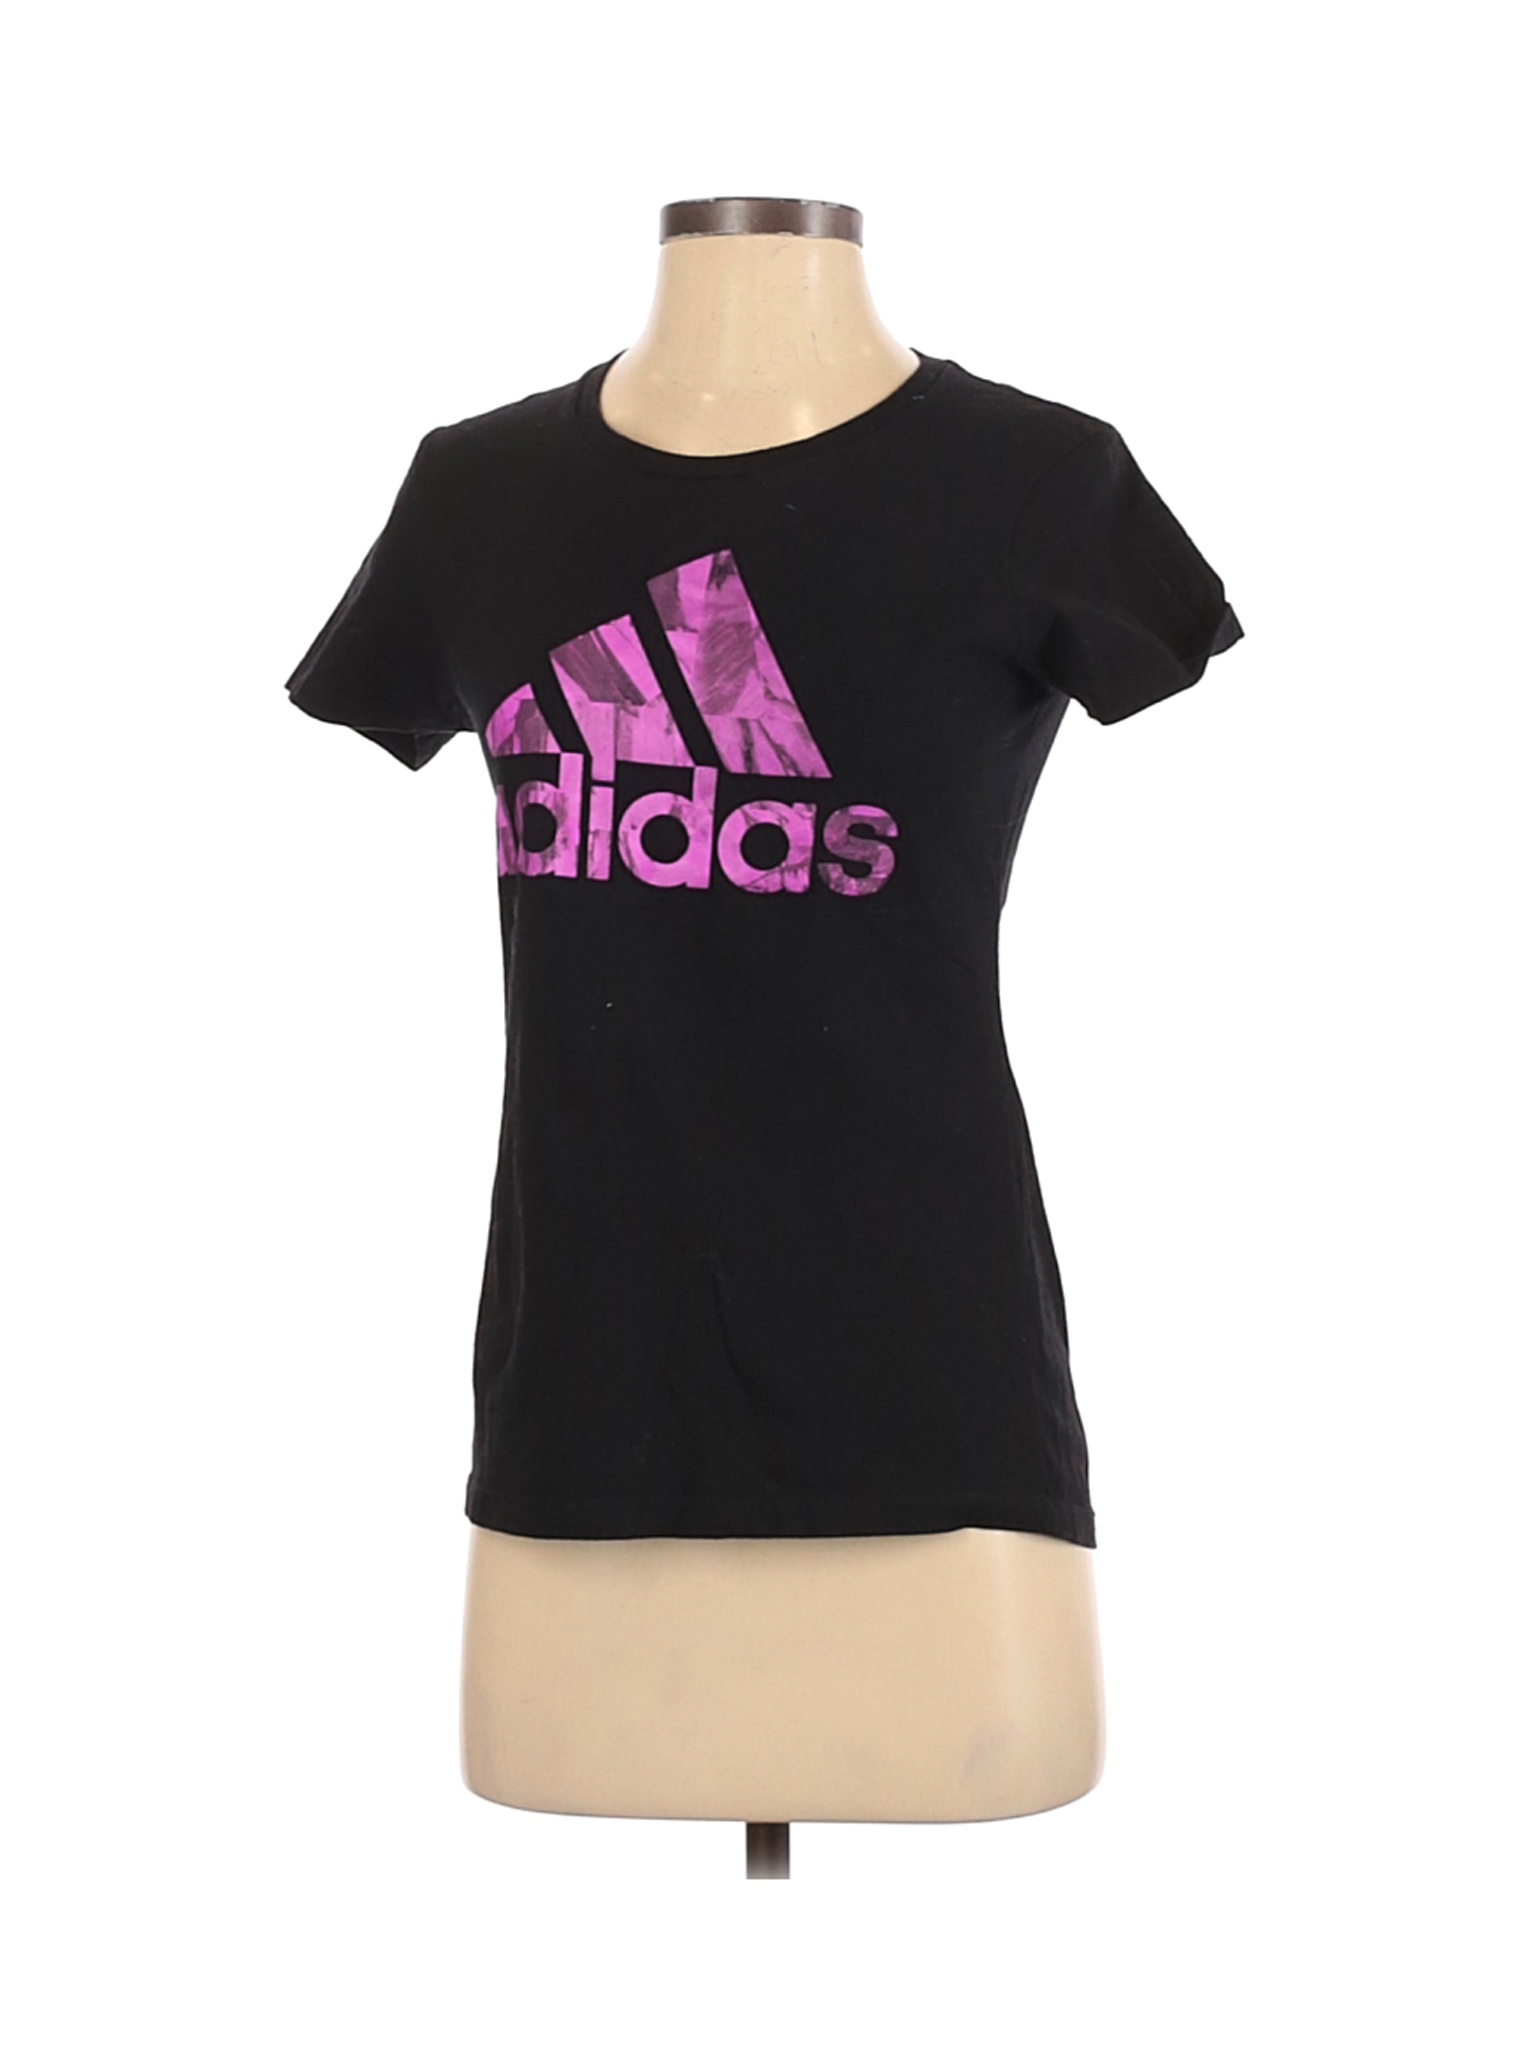 Adidas Women Black Active T-Shirt S | eBay